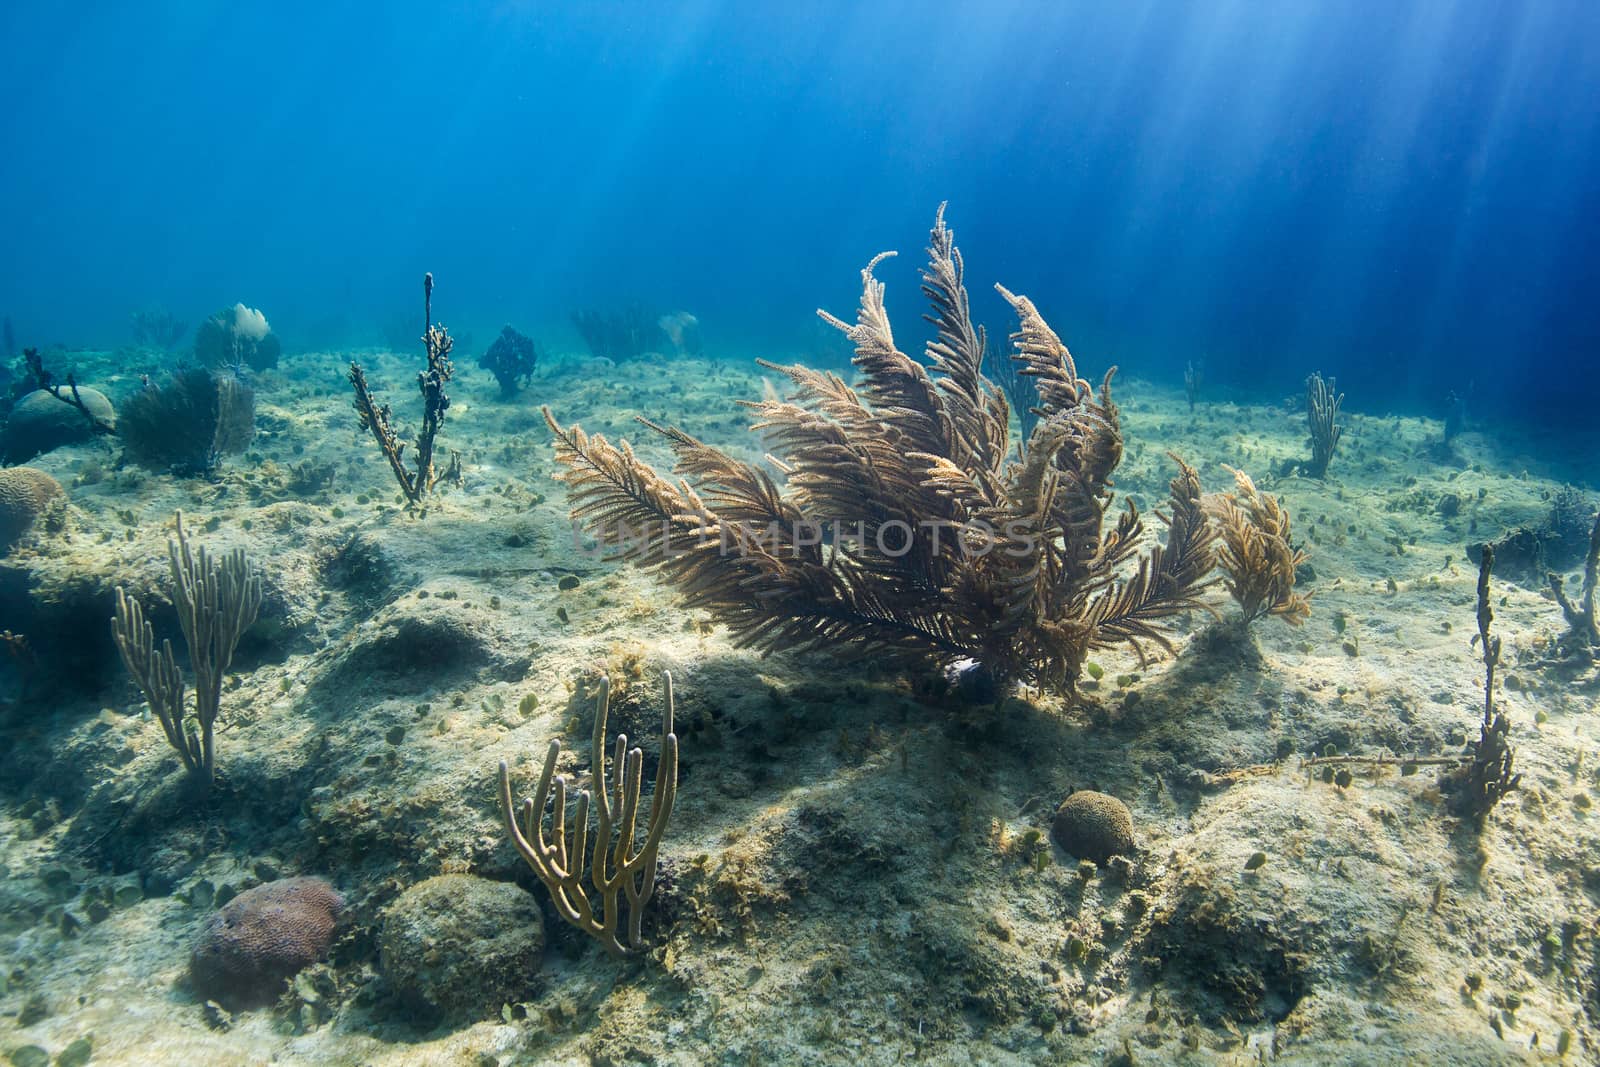 Large soft coral in Atlantic sea reef